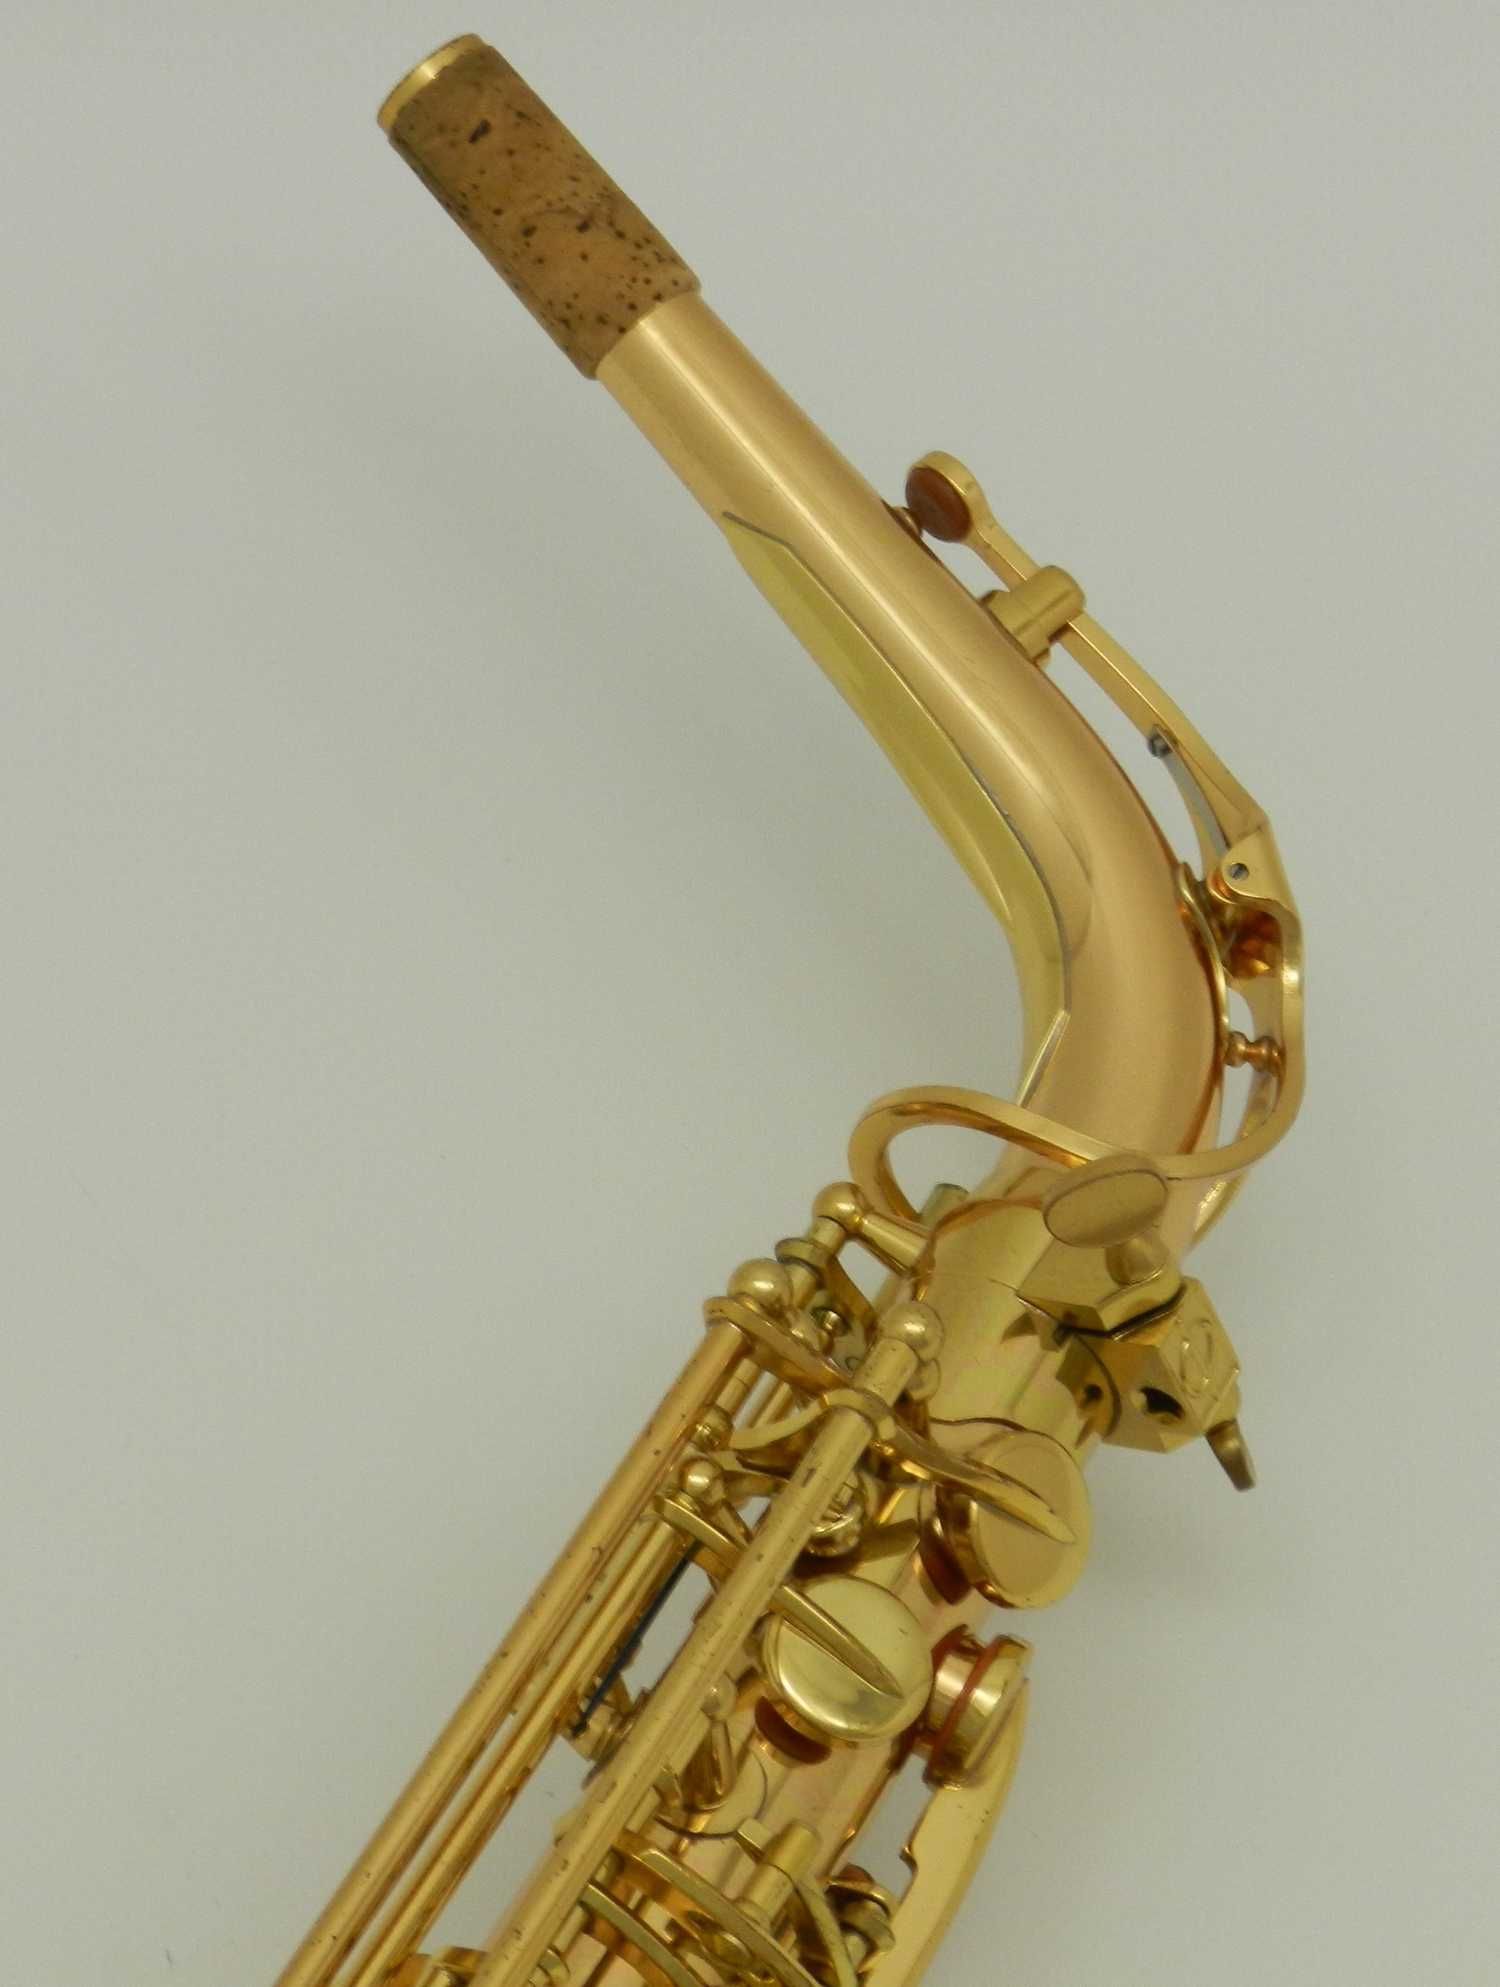 Saksofon altowy Jupiter JAS 769-RB-II DR22-292